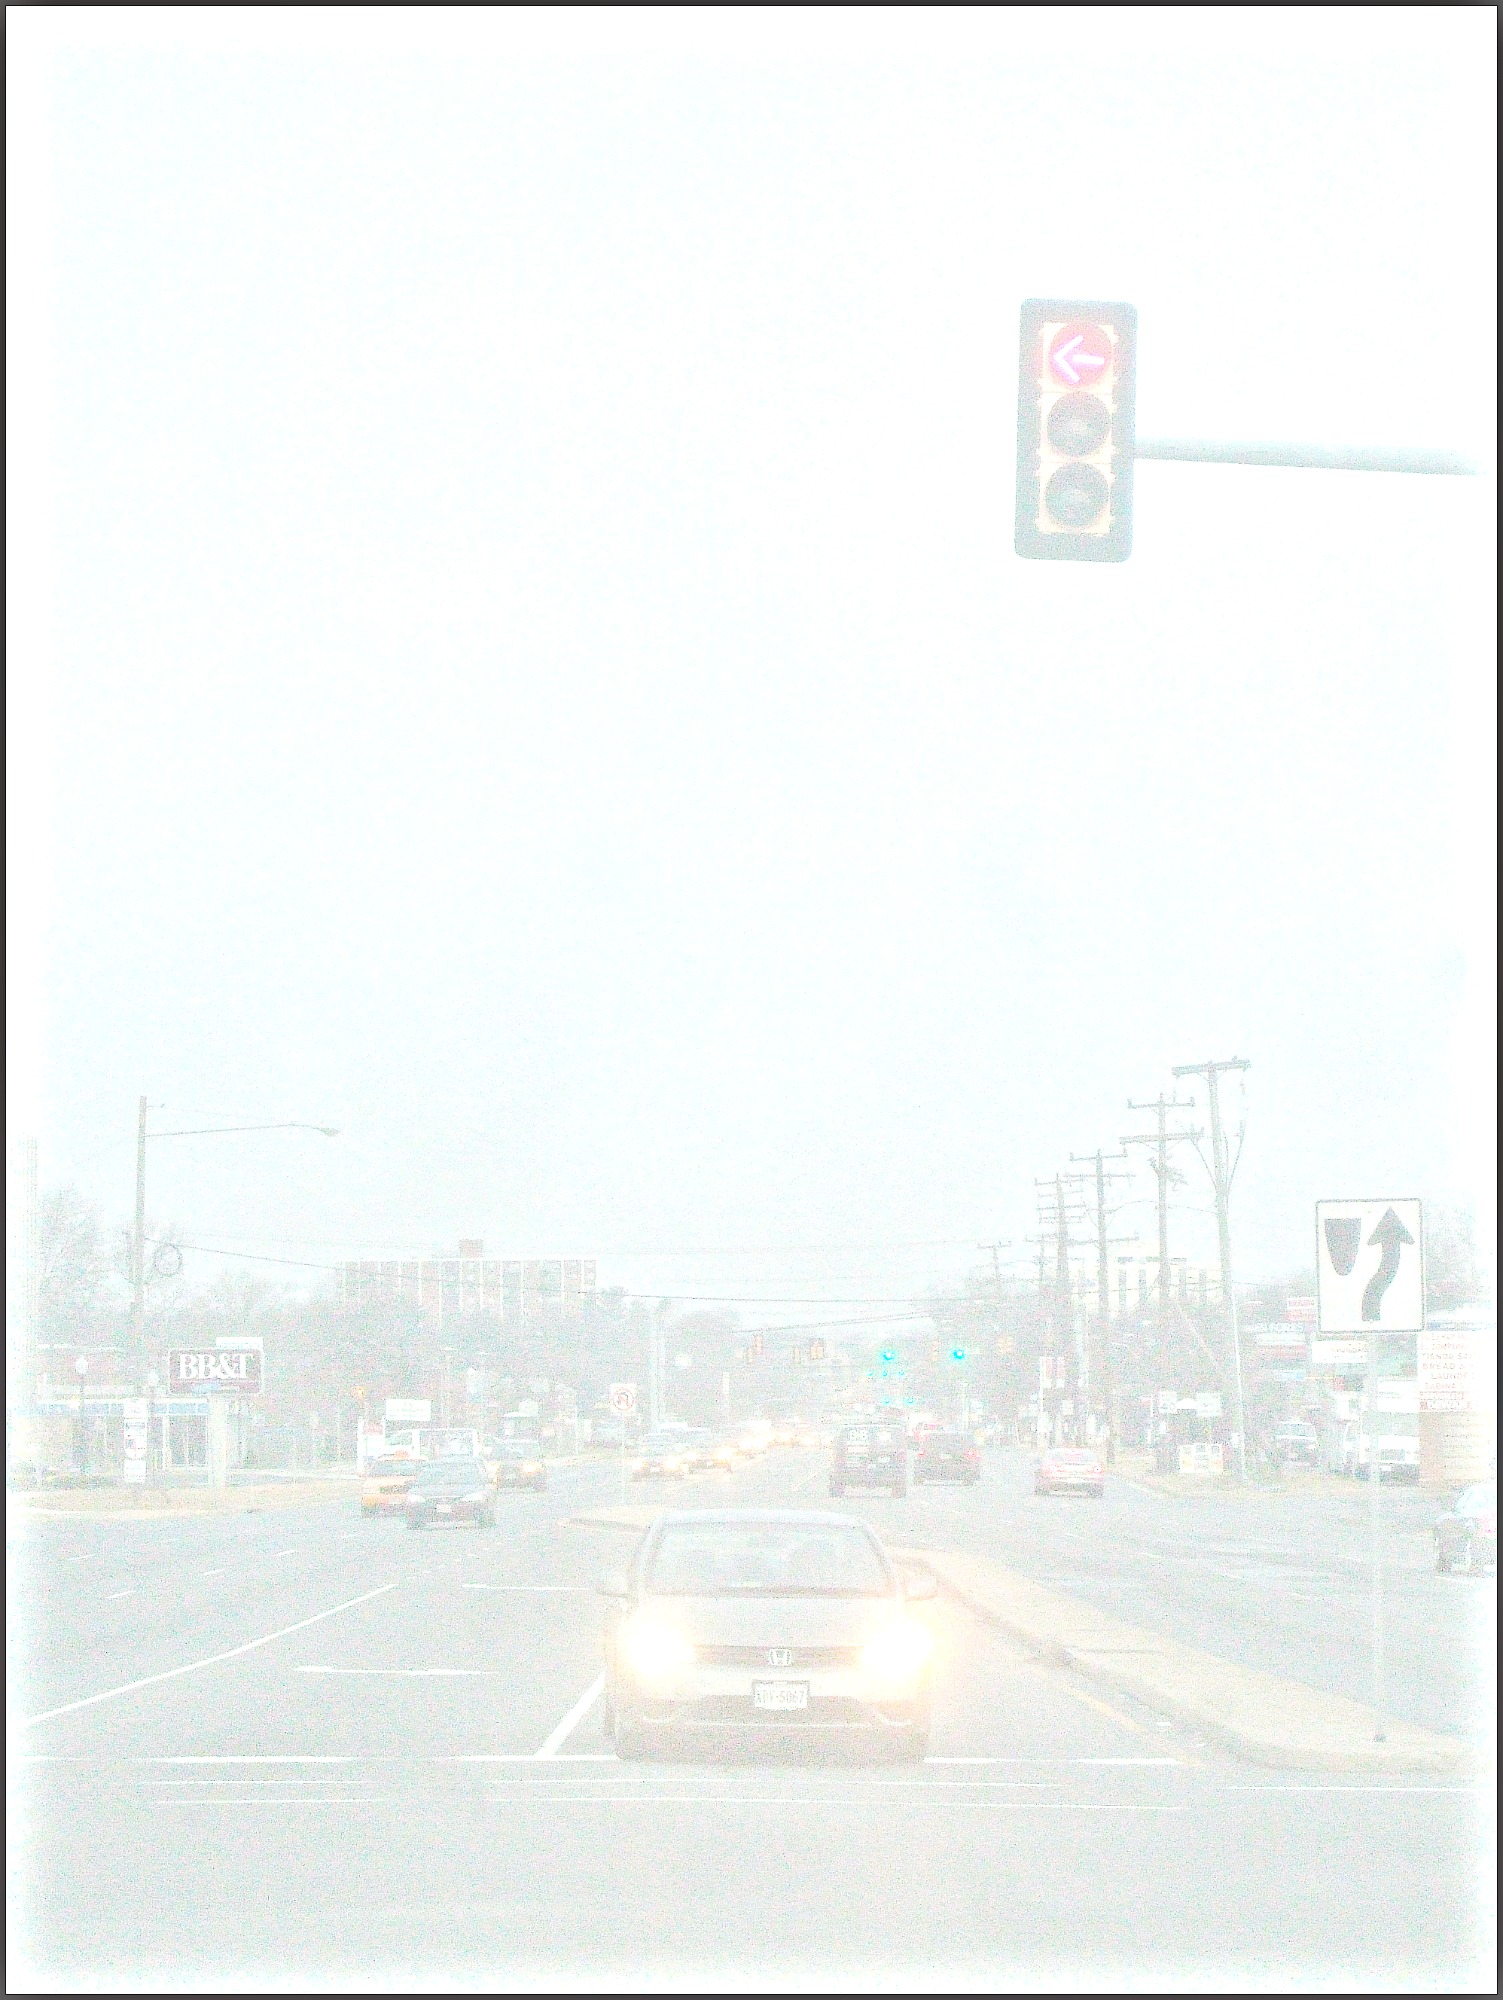 Traffic Light 4 feb 9